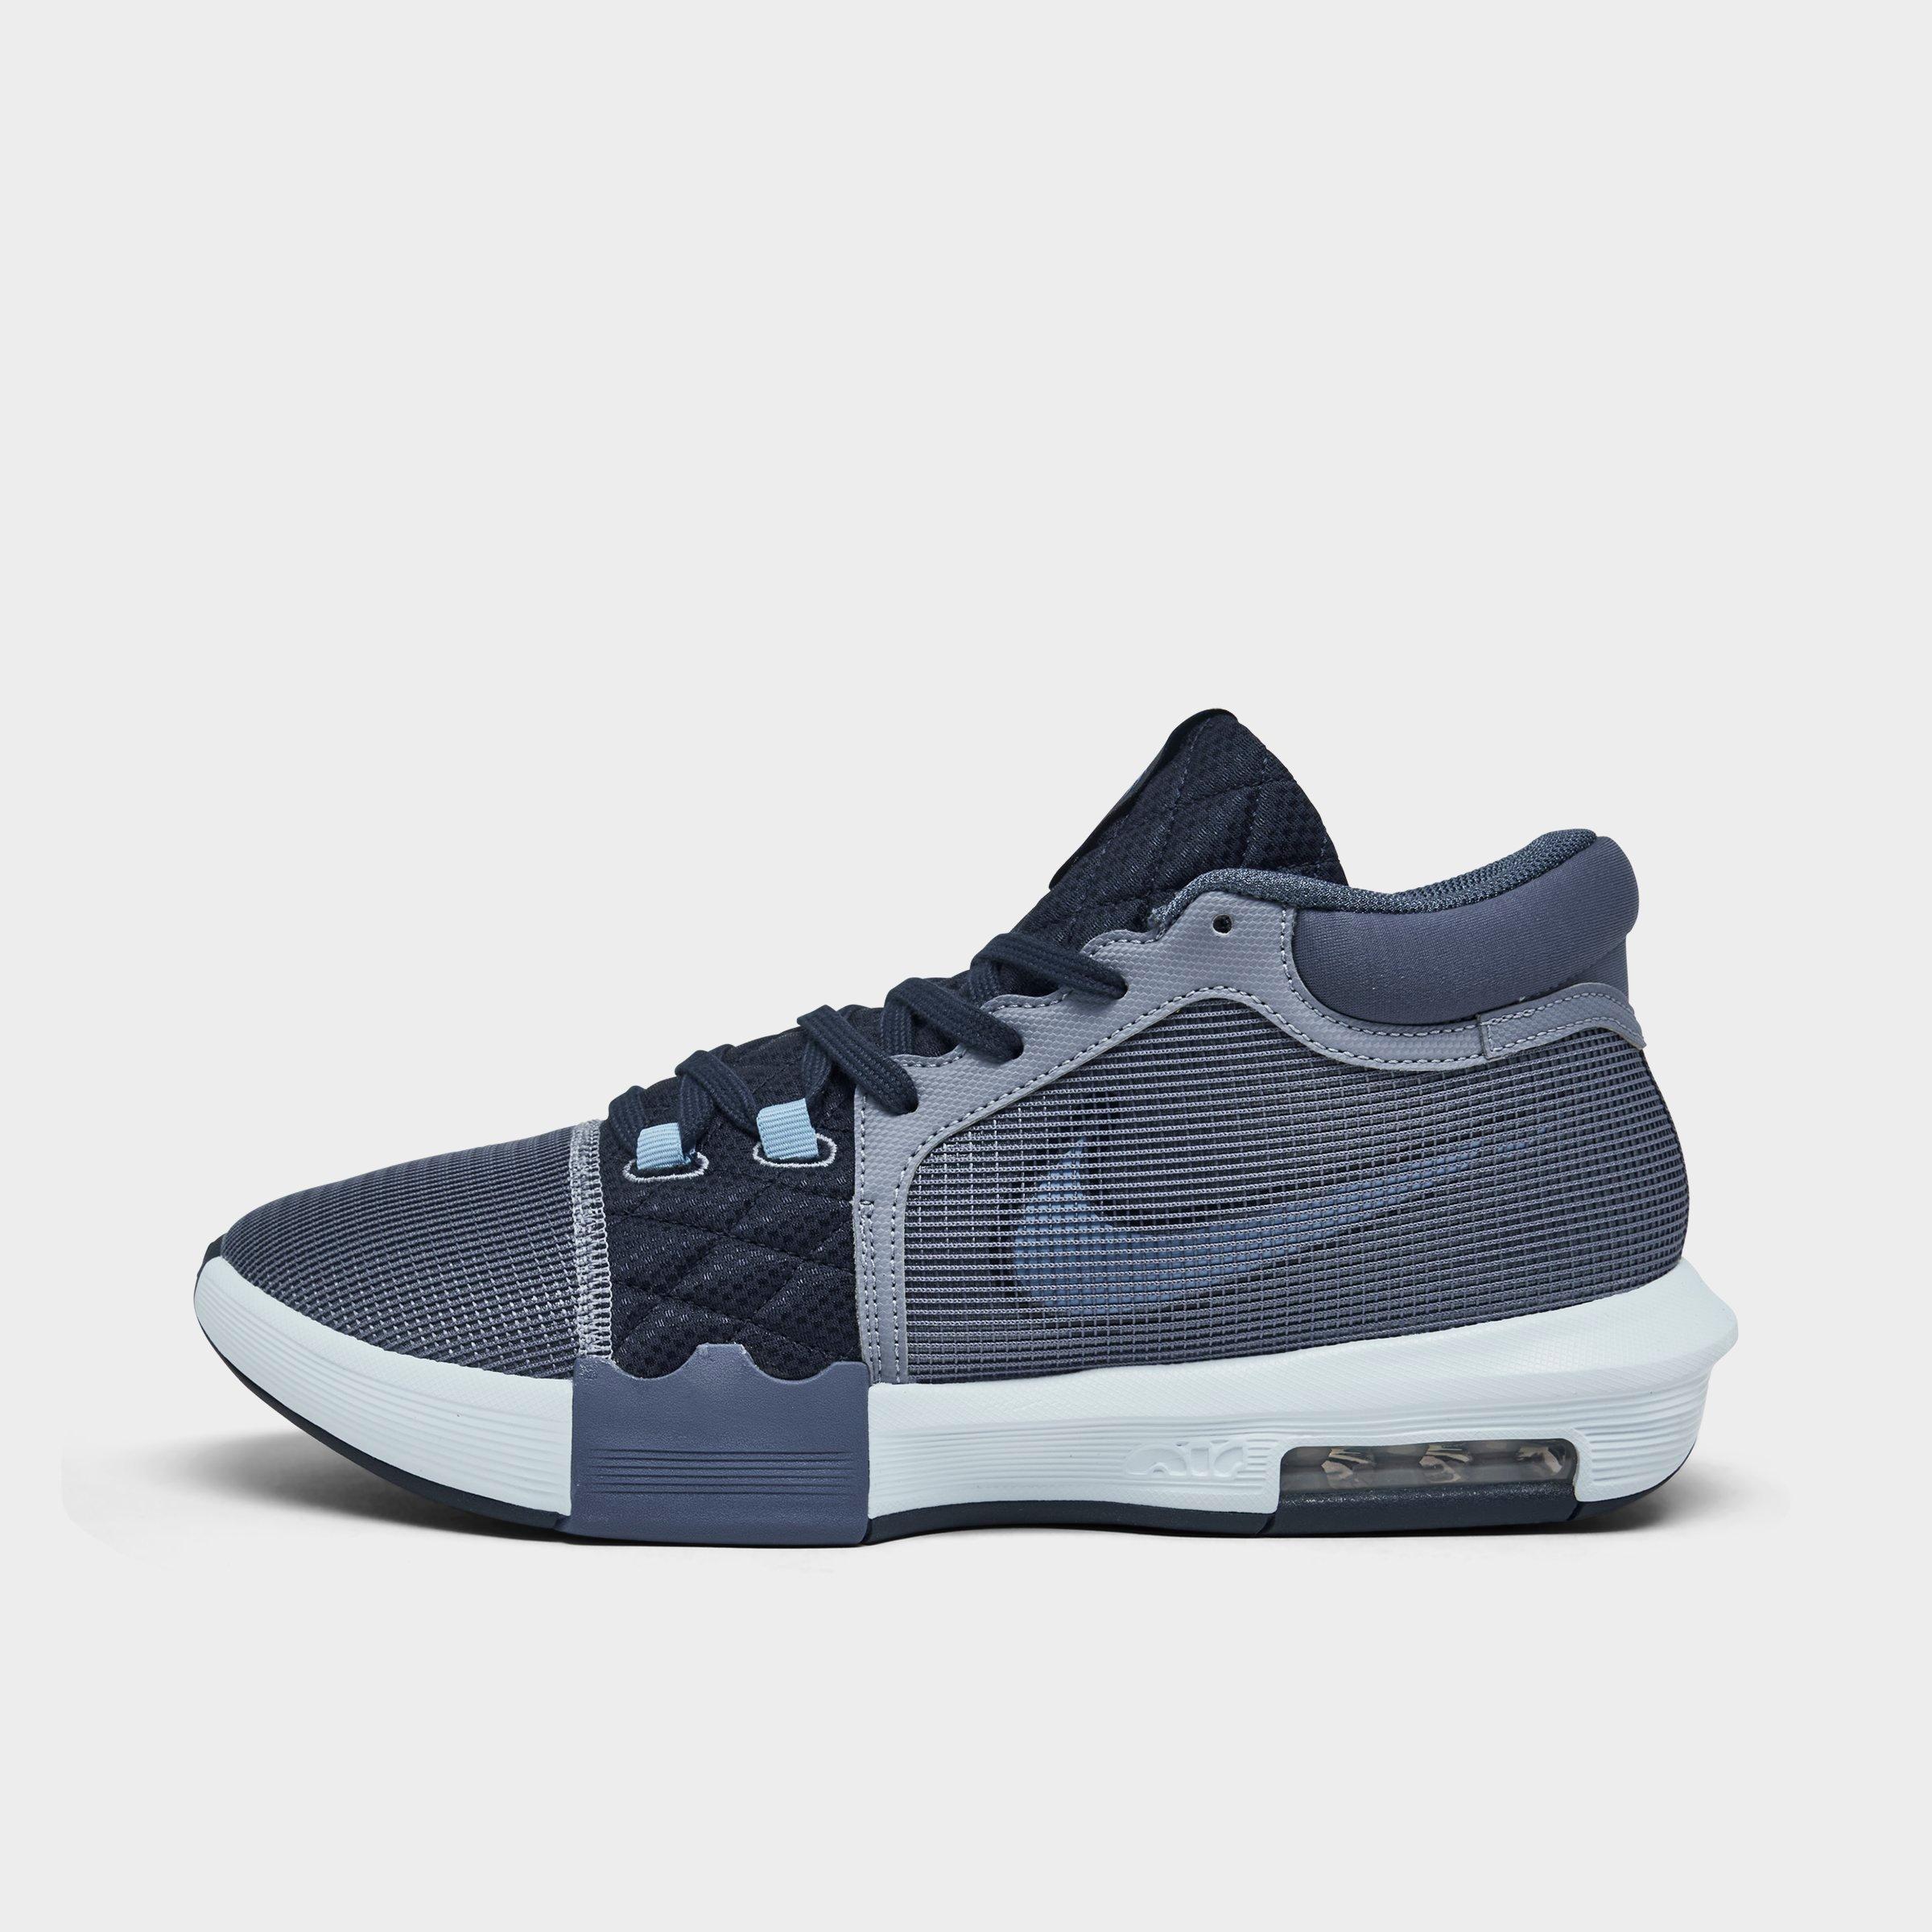 Nike Lebron Witness 8 Basketball Shoes In Ashen Slate/diffused Blue/university Blue/white